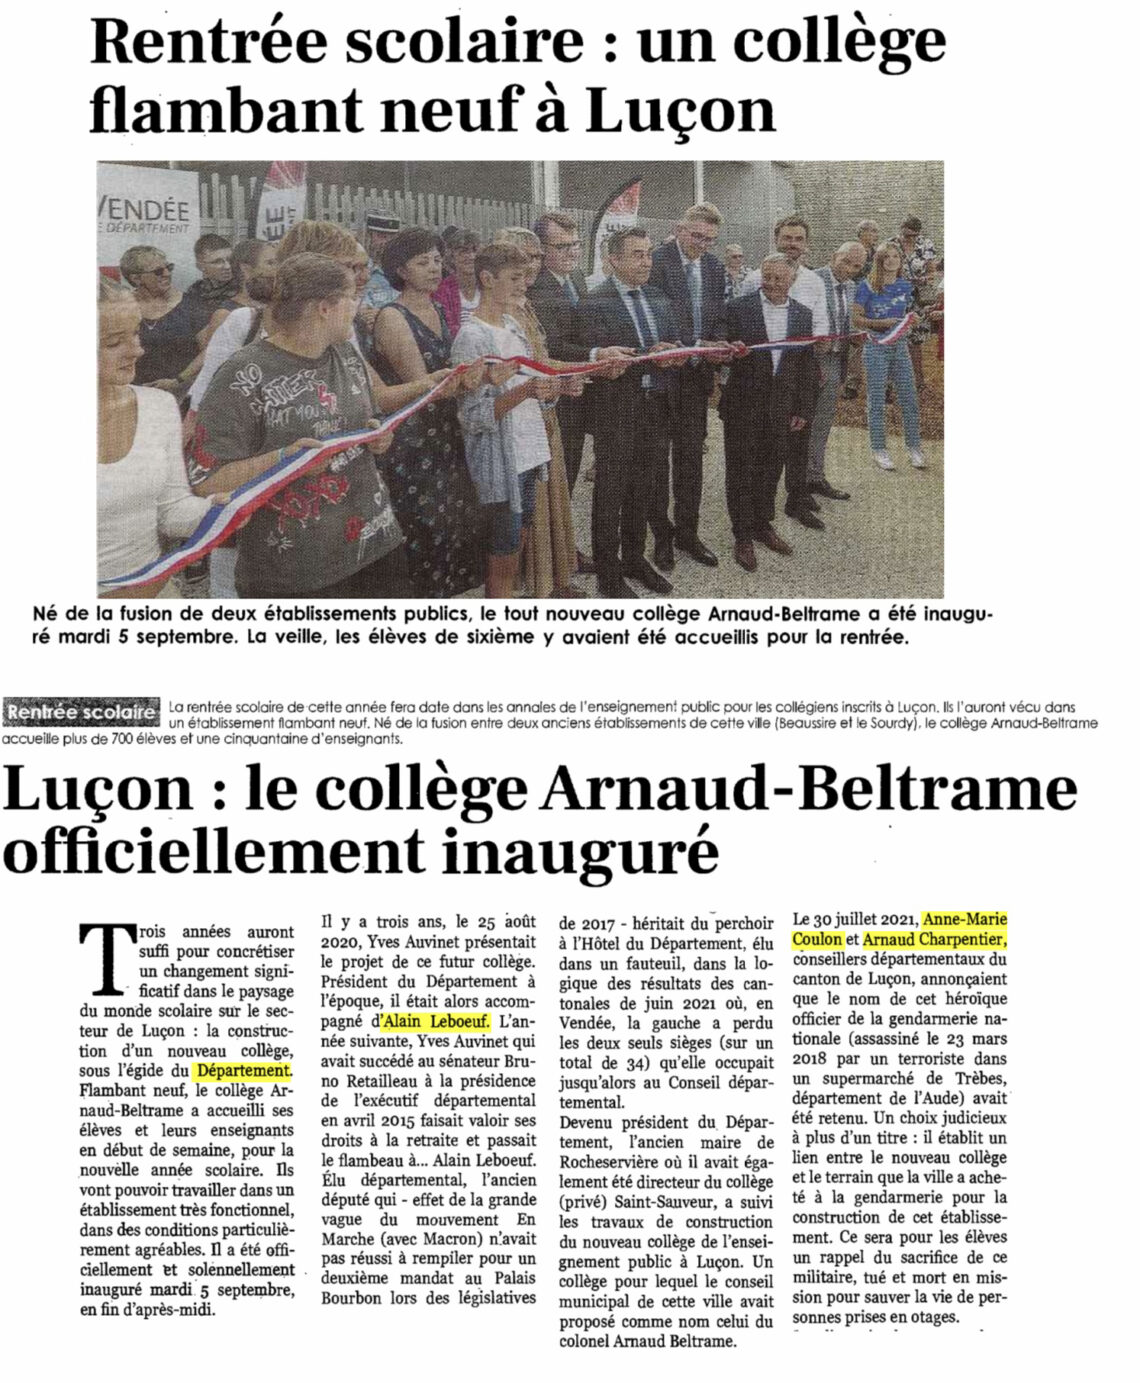 Inauguration du collège Arnaud Beltrame